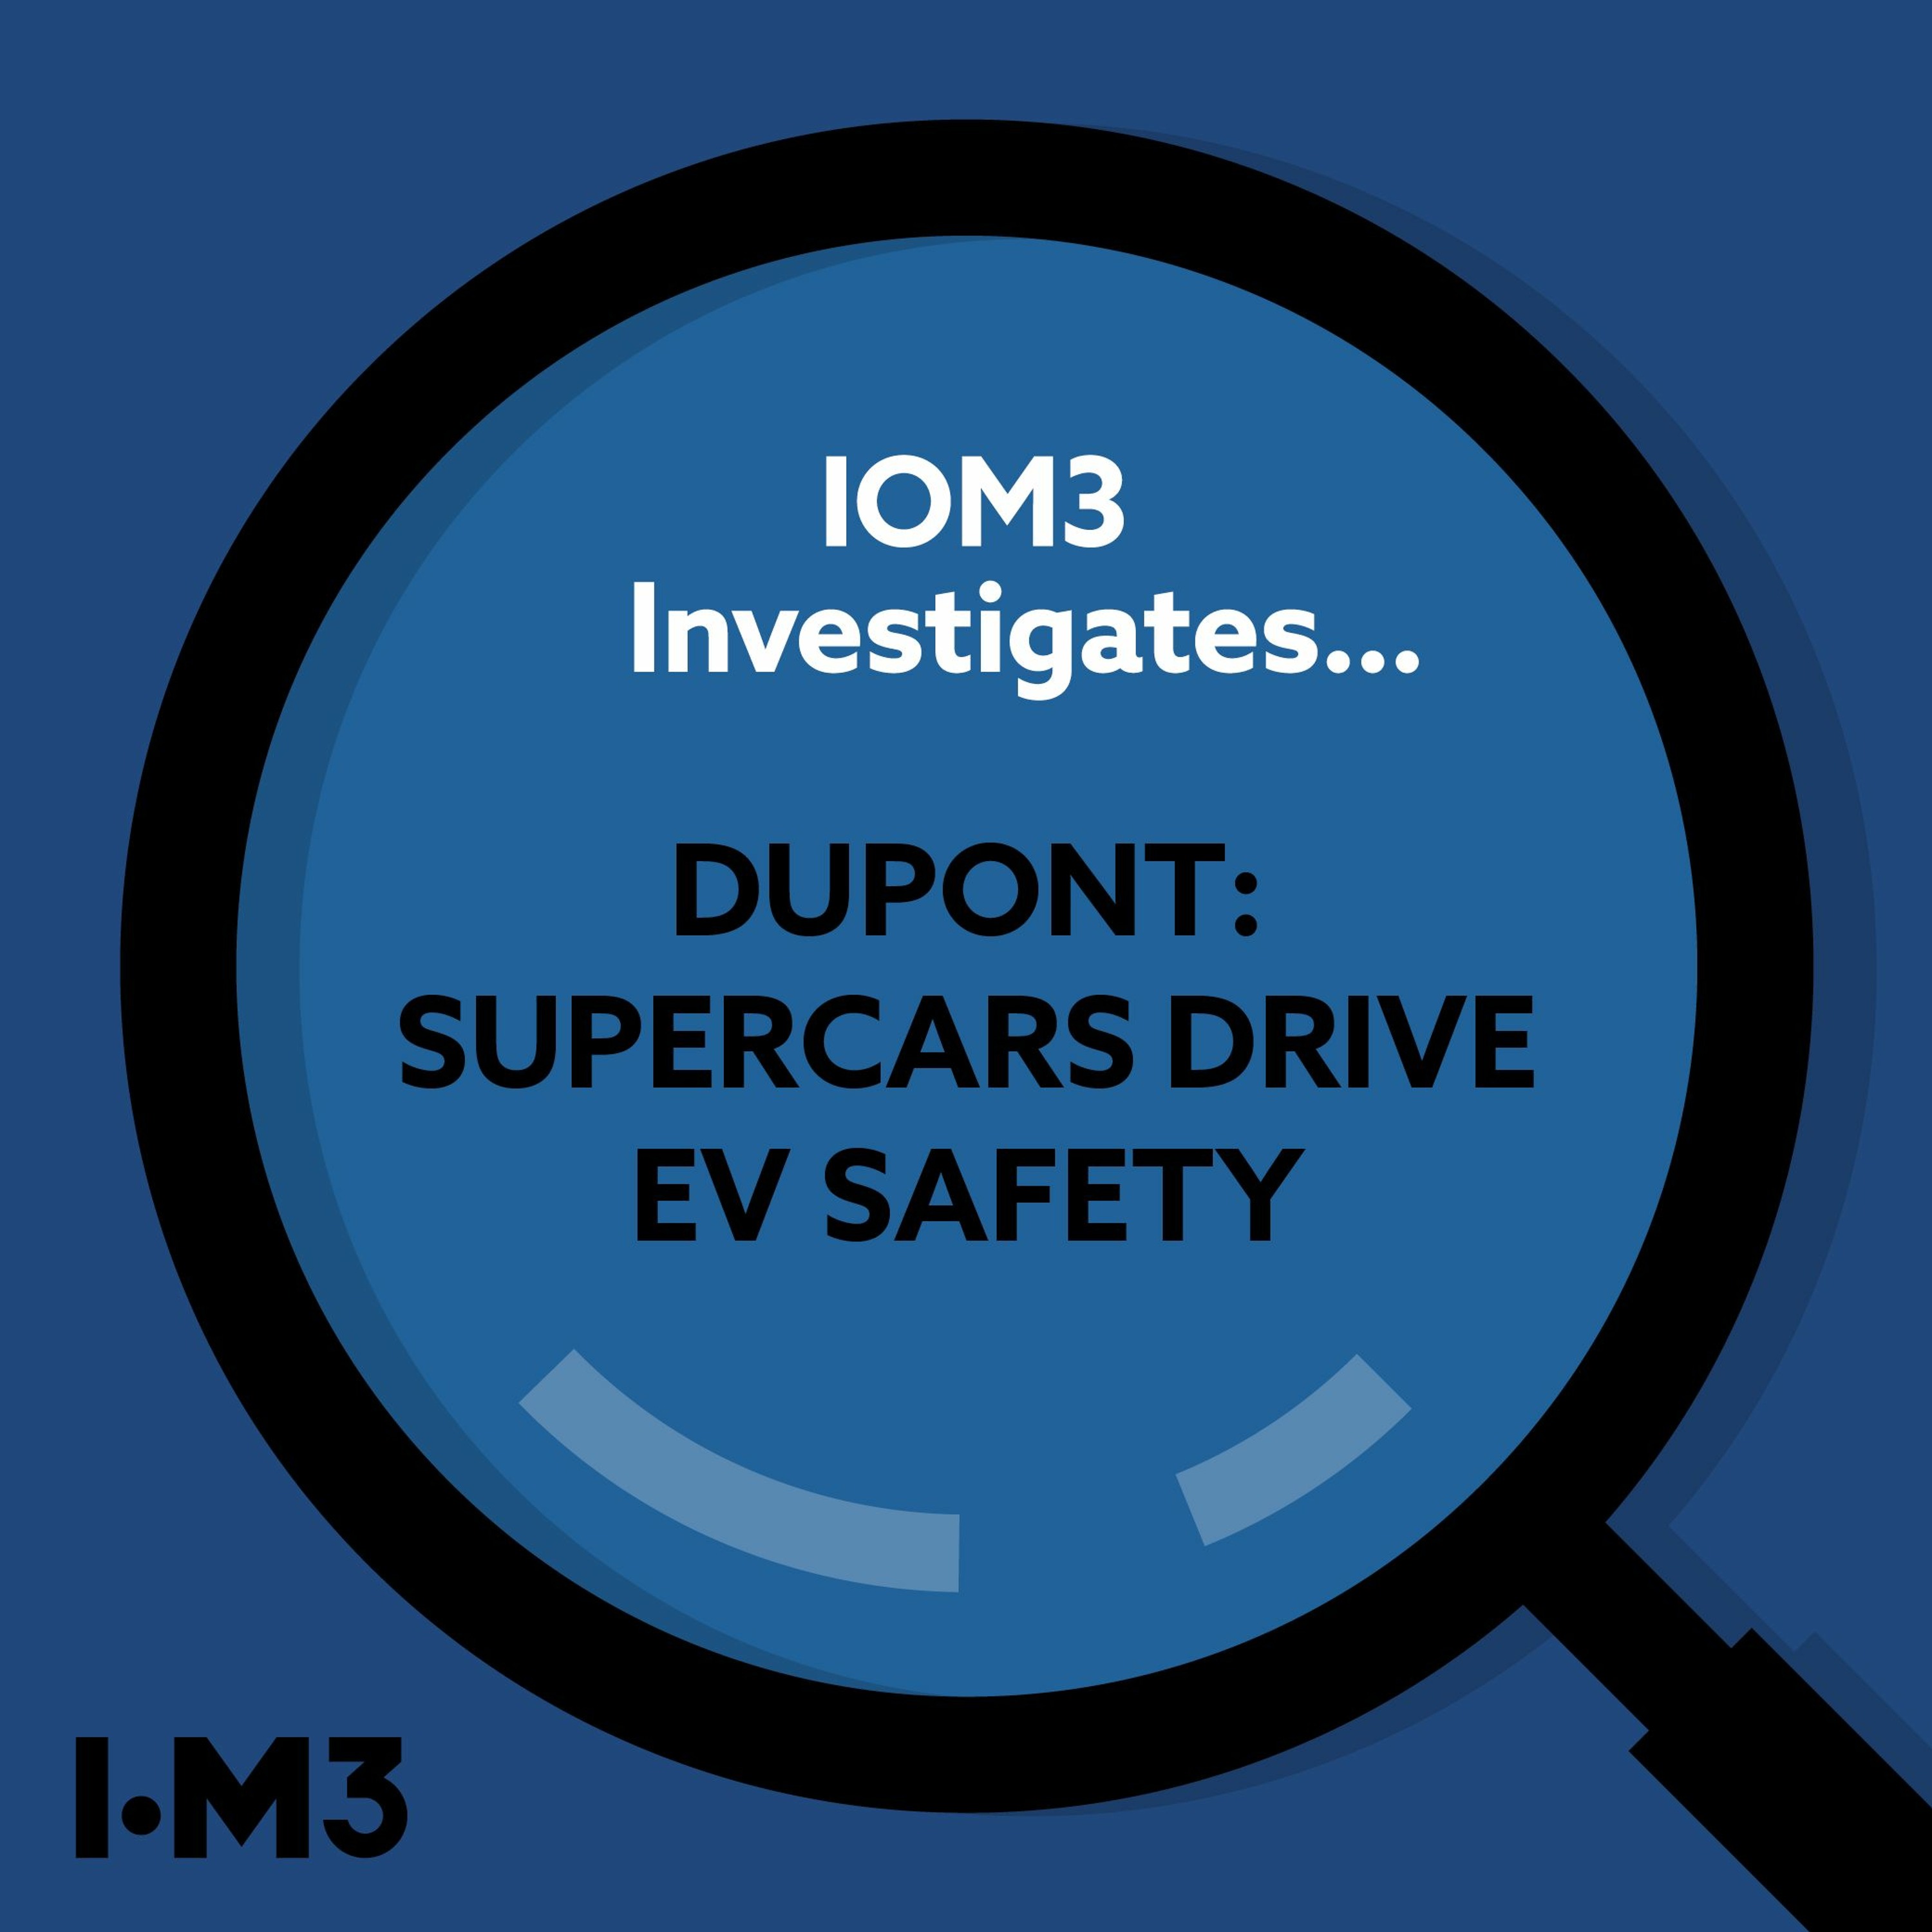 Dupont: Supercars drive EV safety